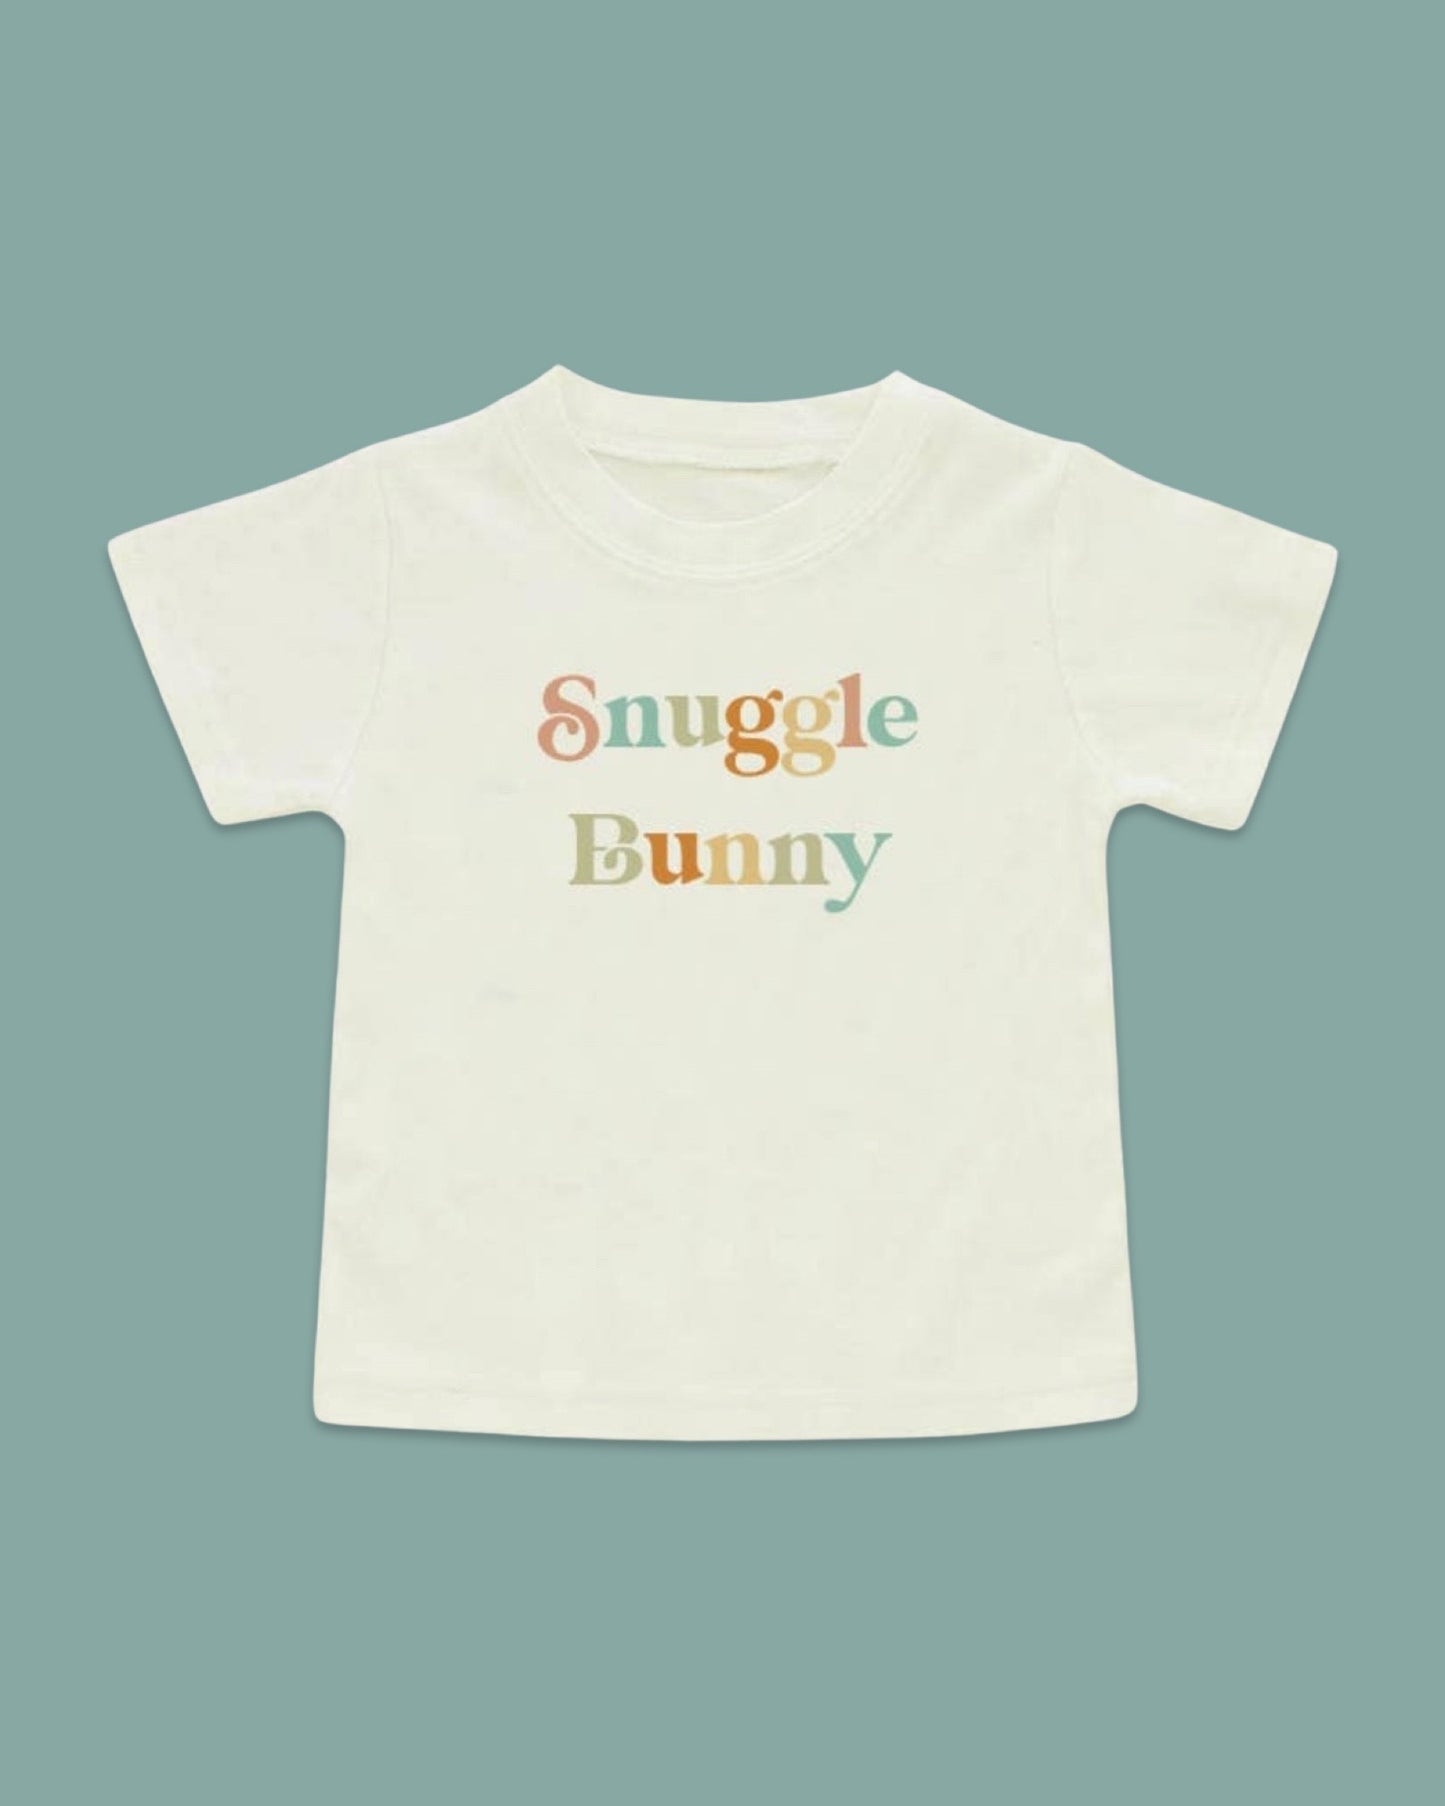 Snuggle Bunny, Kids Easter Tee Shirt